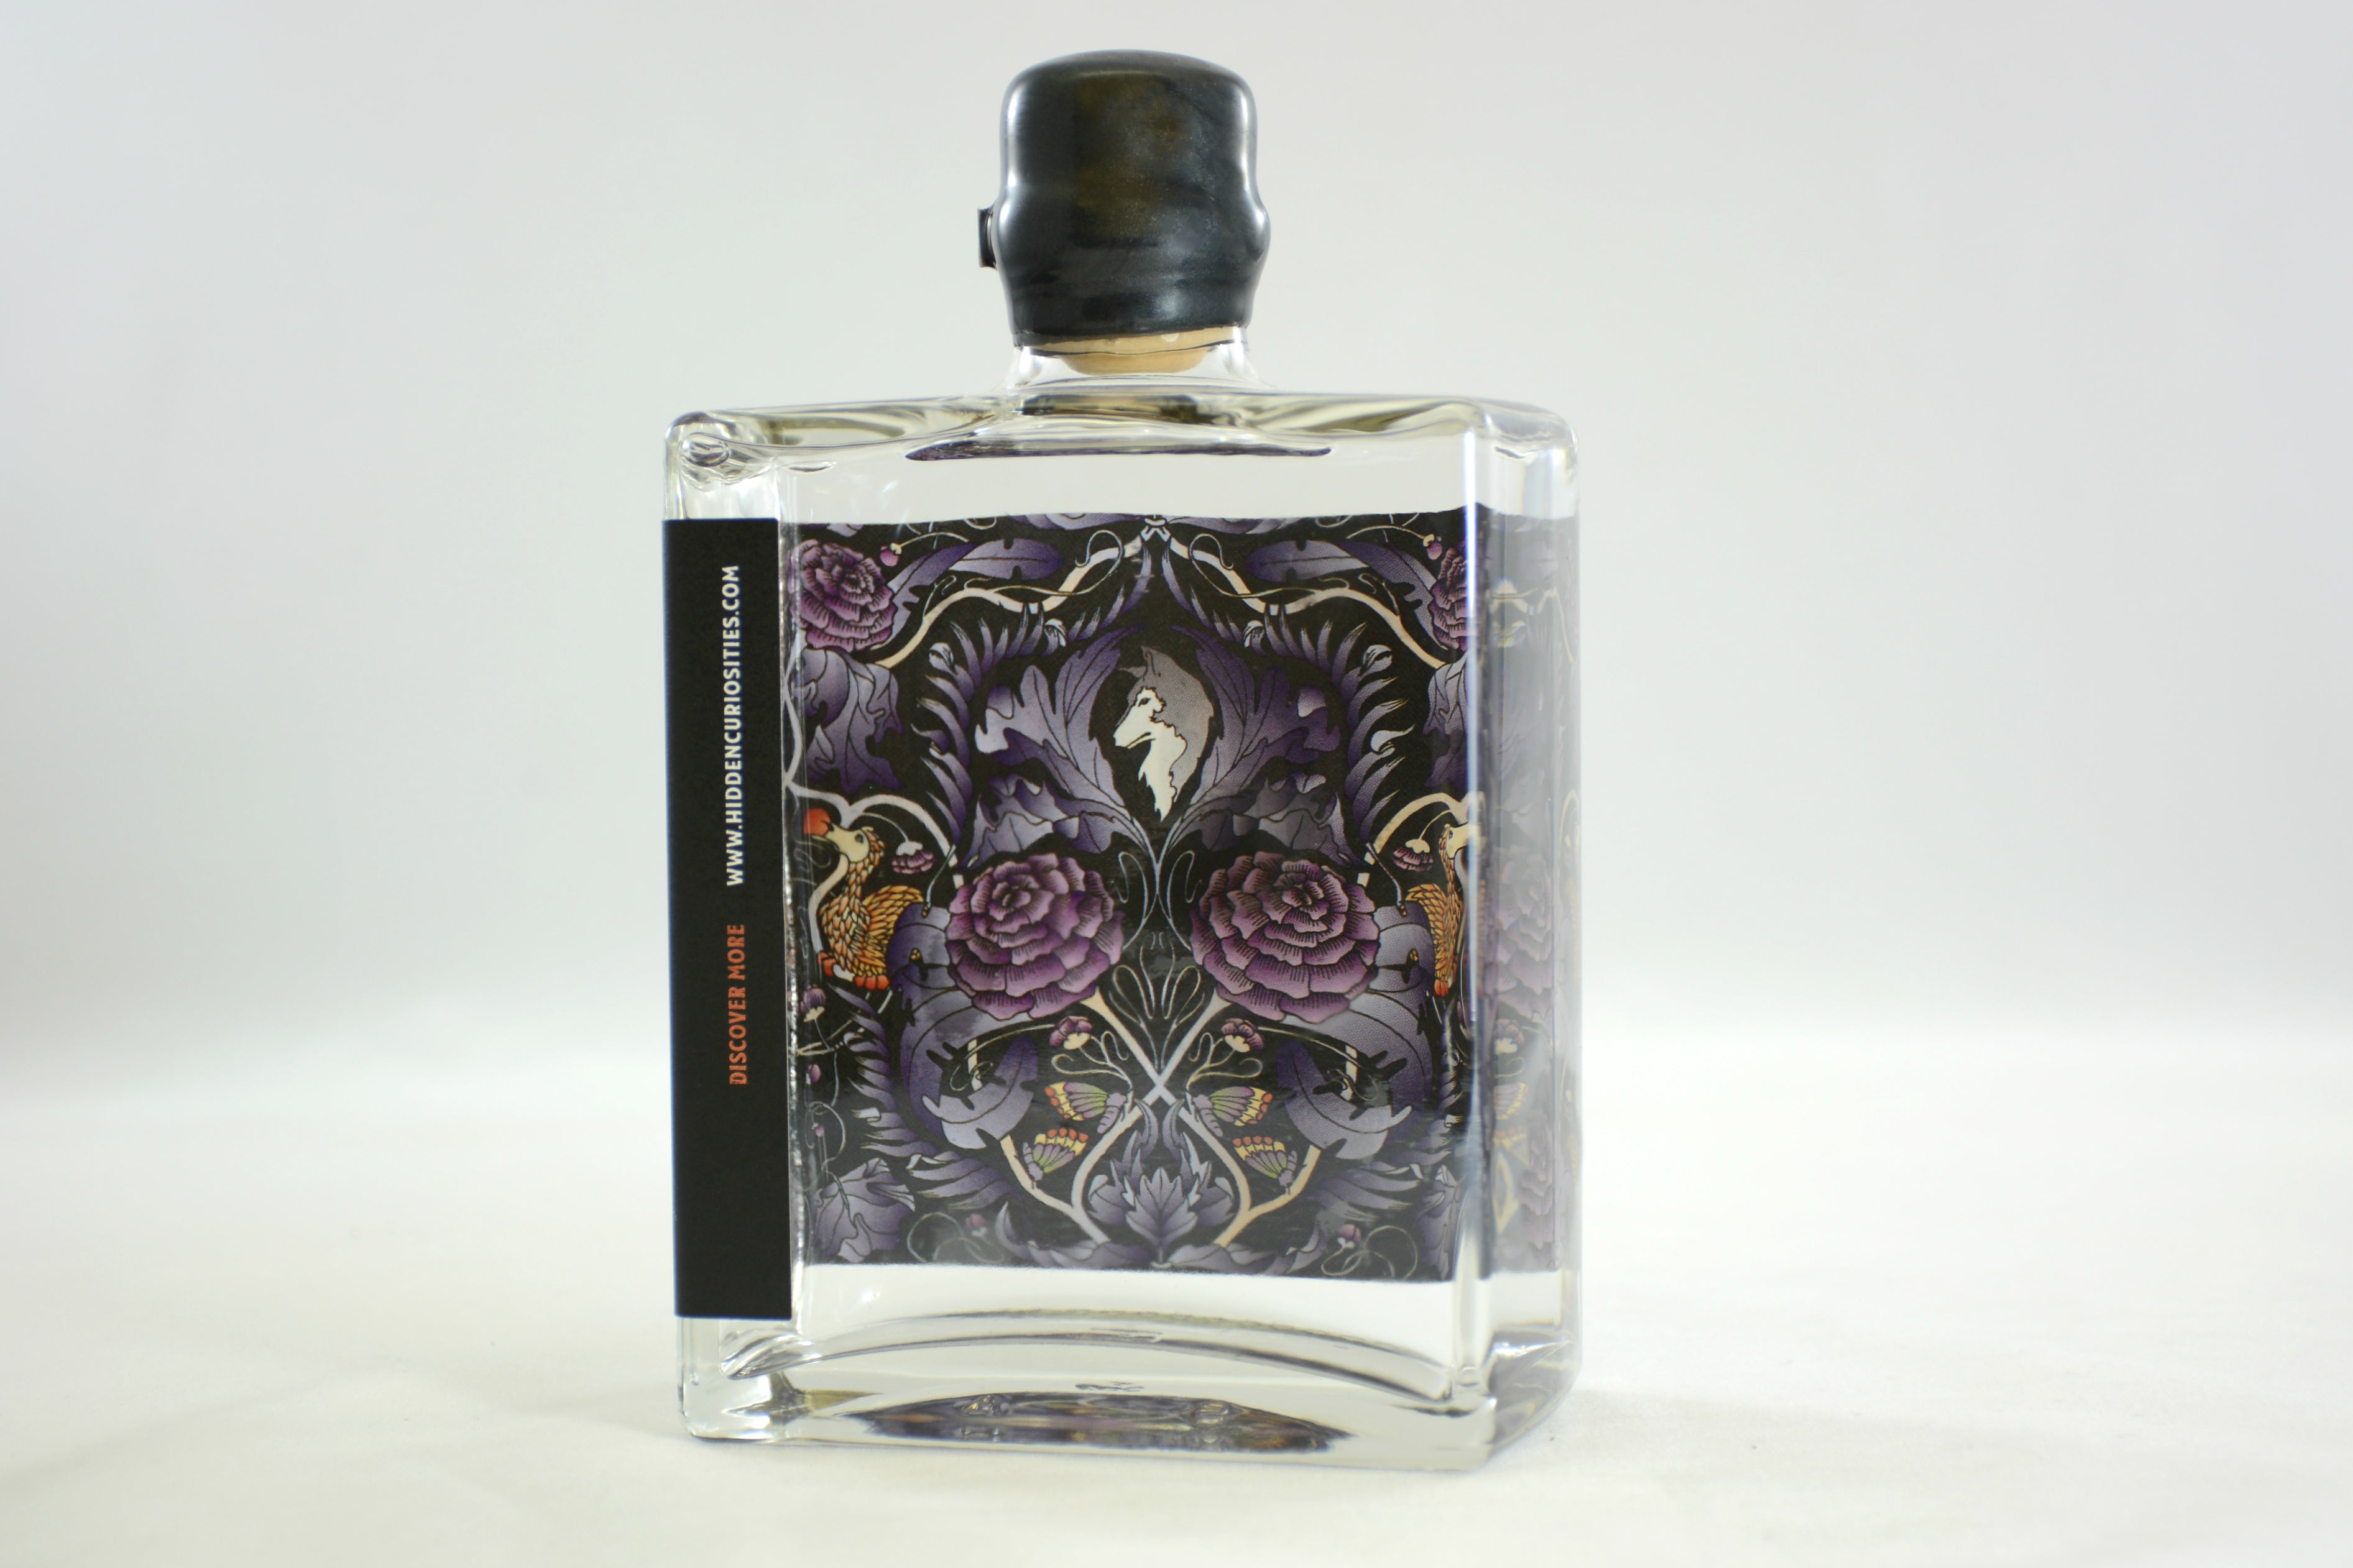 Hidden Curiosities Aromatic London Dry Gin Batch No. 6